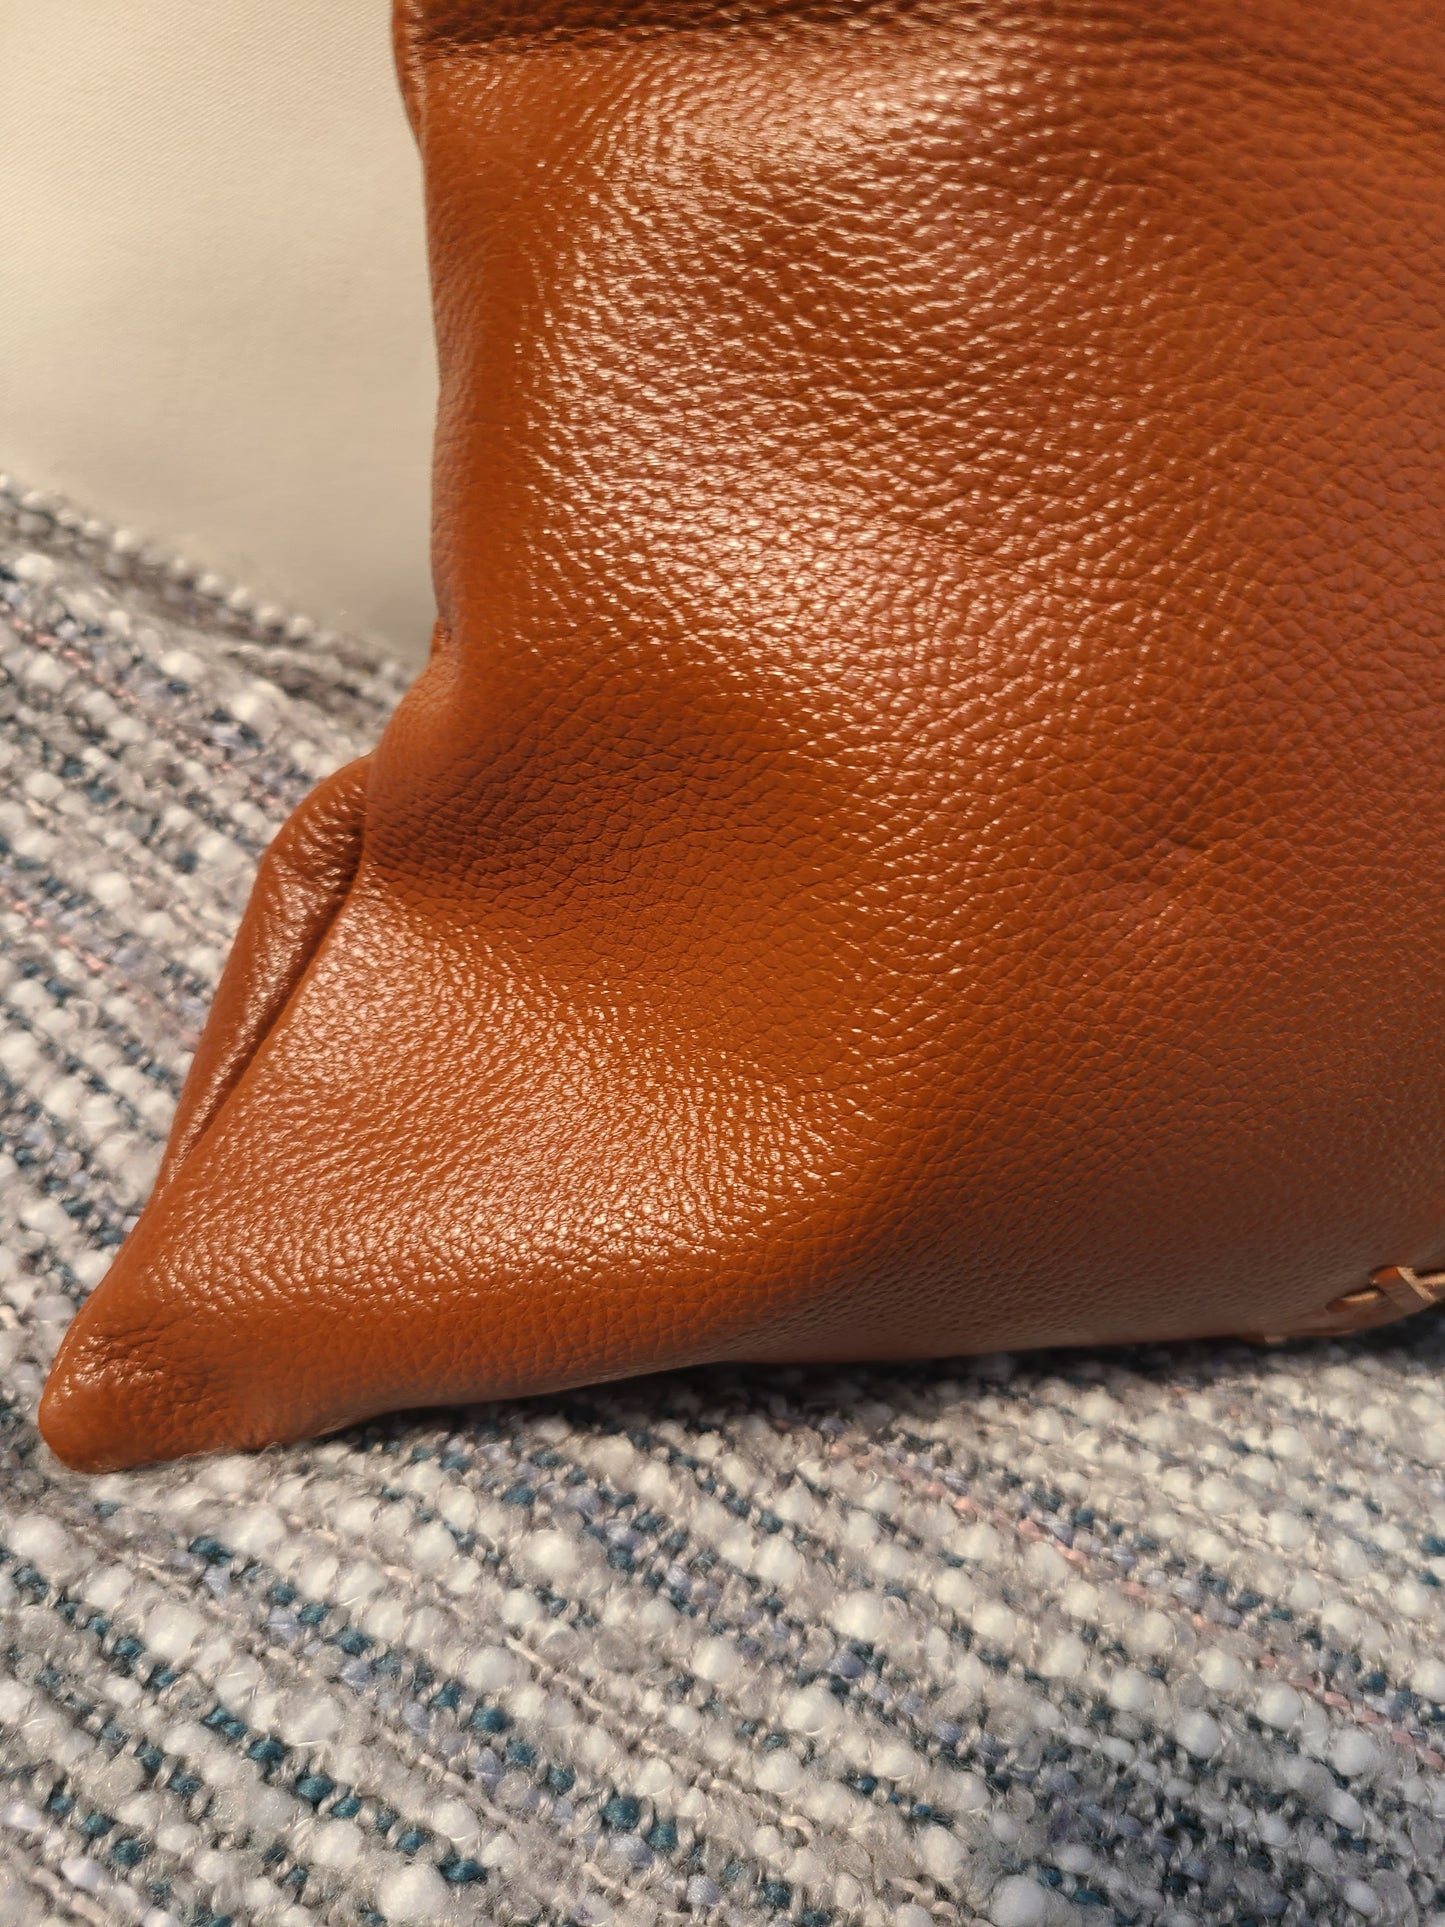 100% Leather Burnt Orange Throw Pillow Cover - 16 x 16-Status Co. Leather Studio